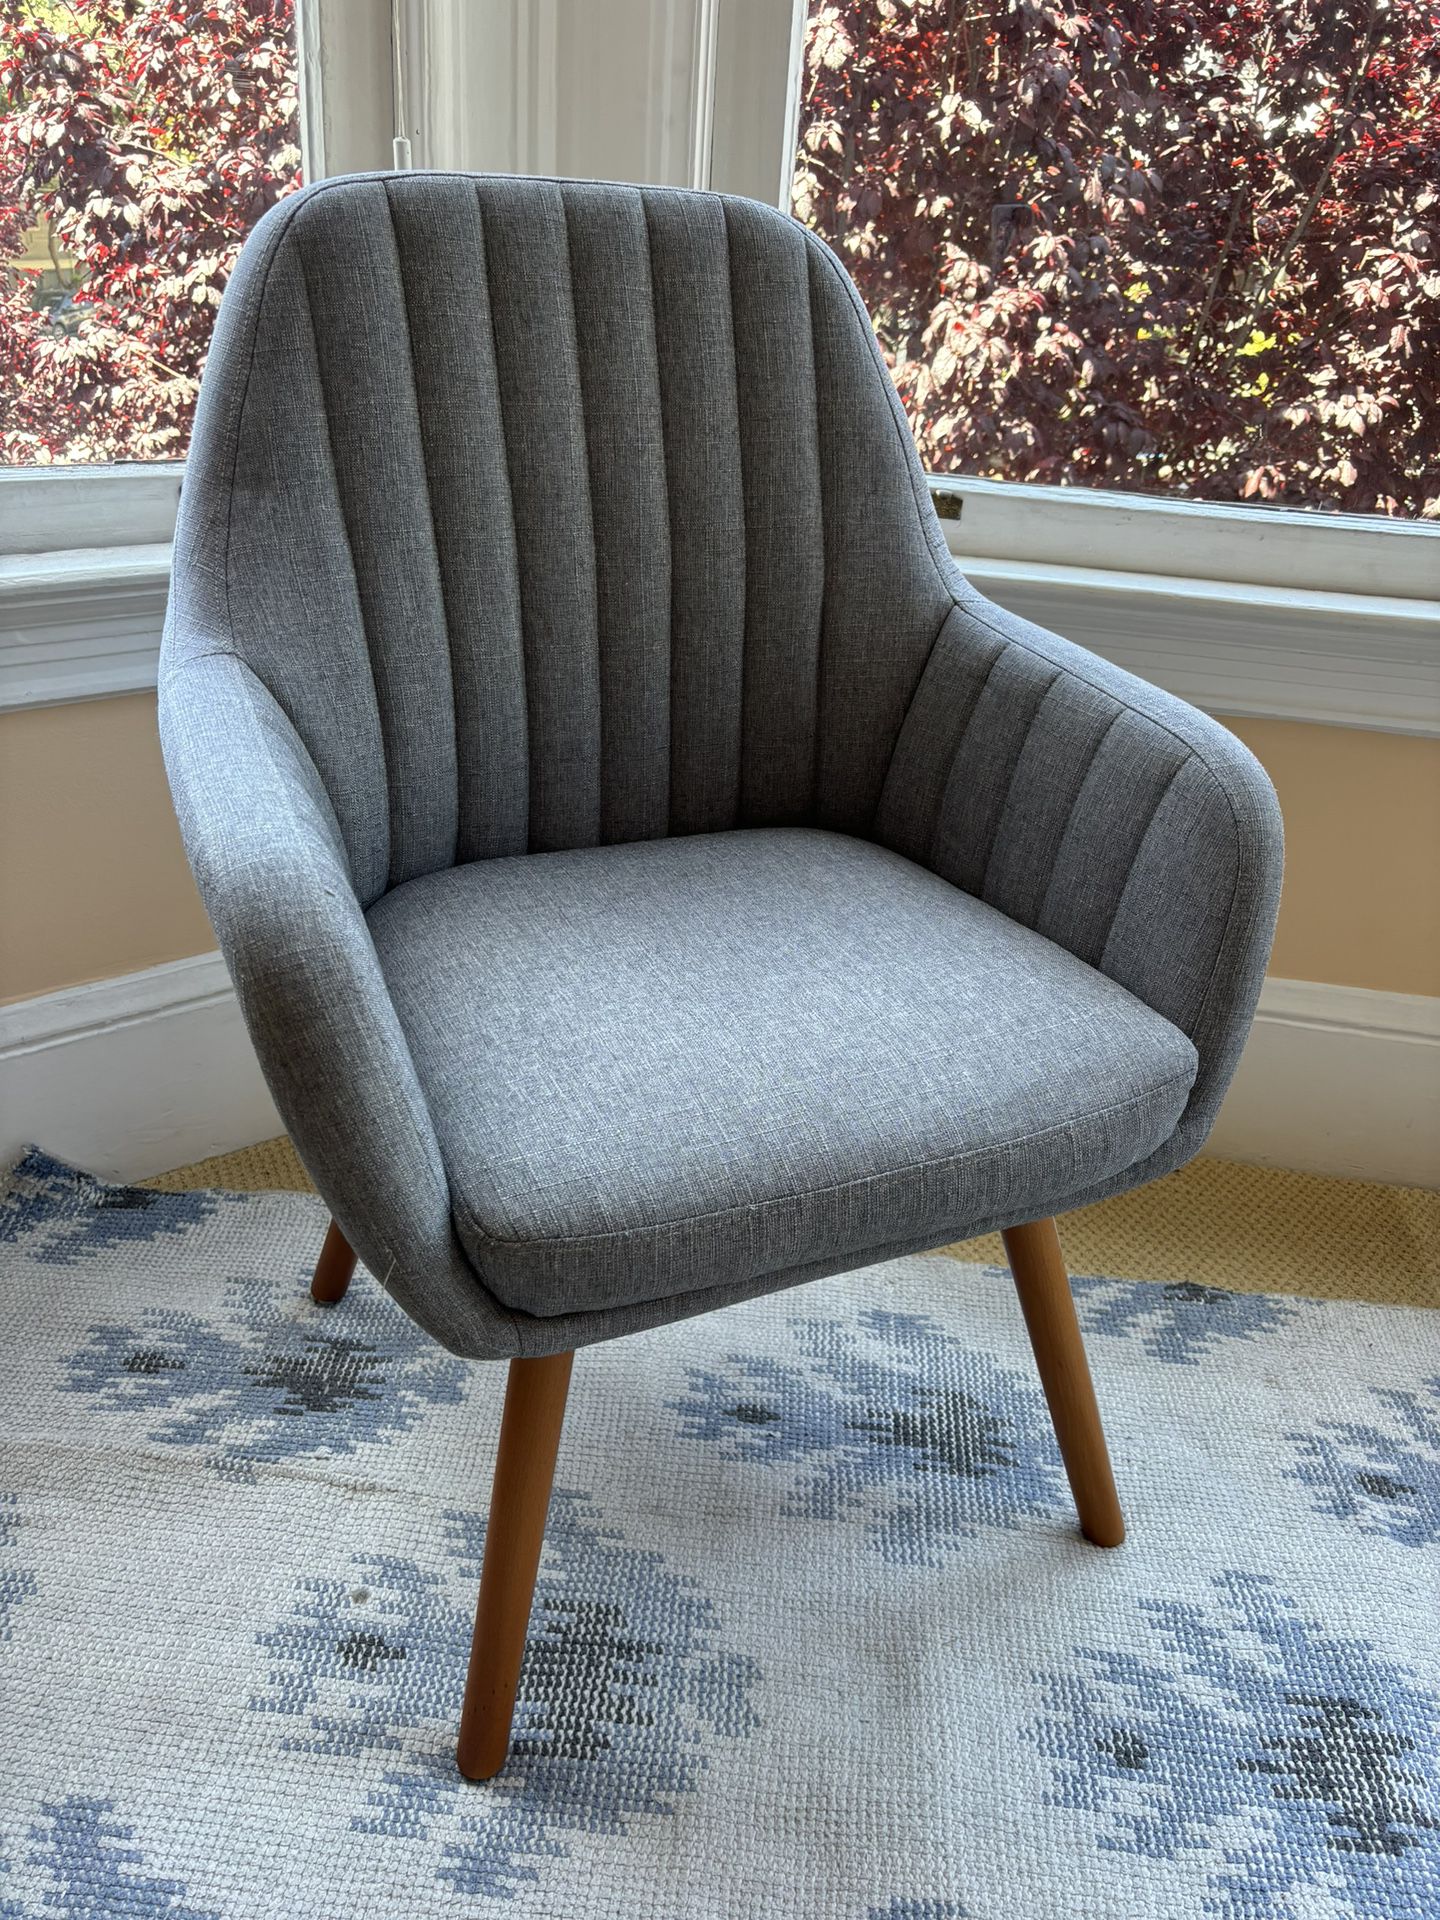 Gray Wayfair mid-century accent chair